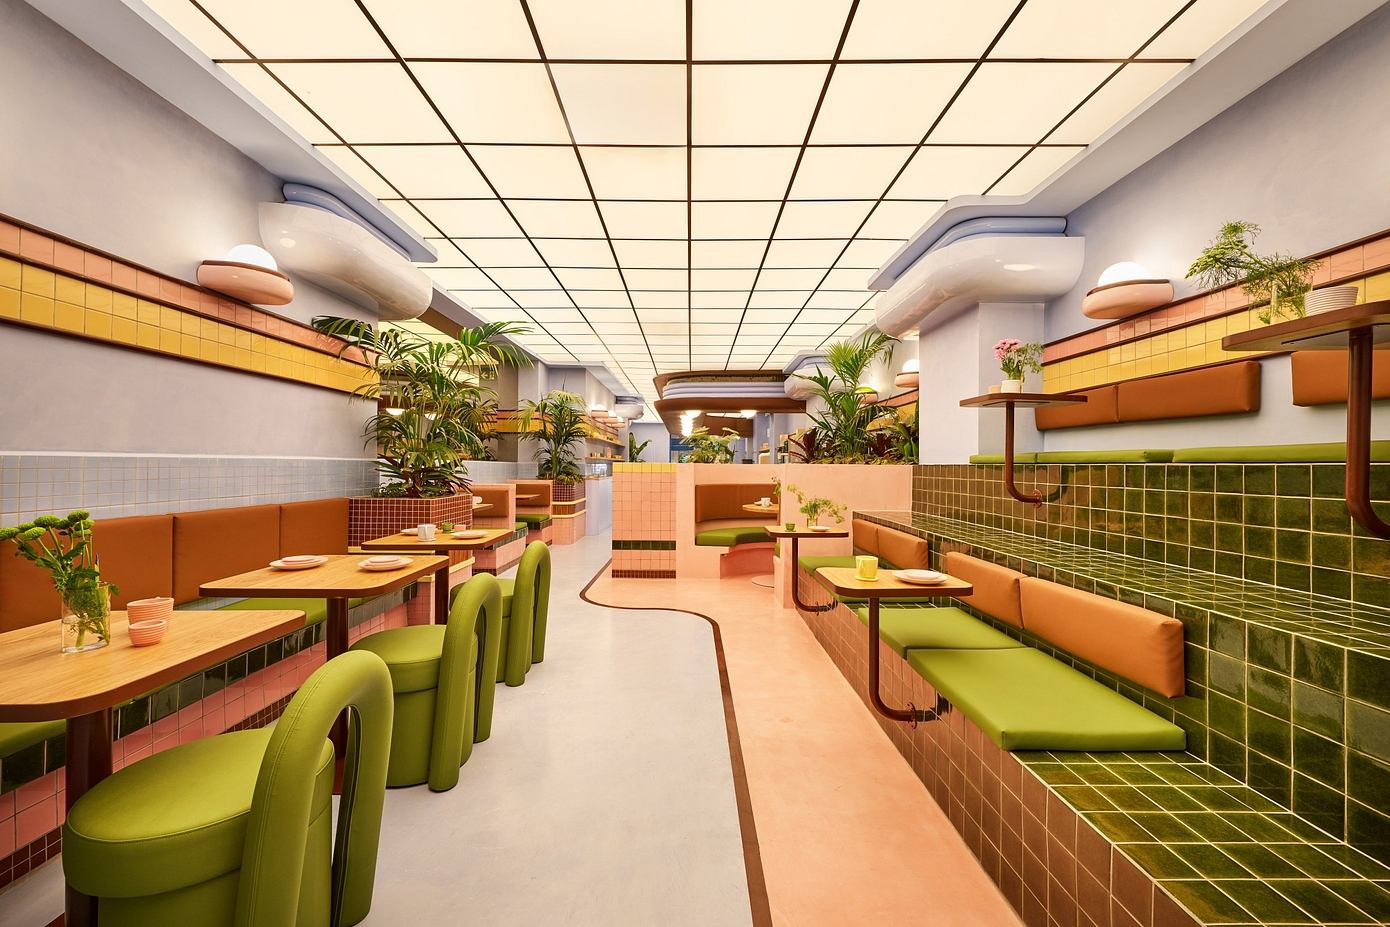 Amiko Gelato: A Stunning Art Deco Ice Cream Parlor in Barcelona